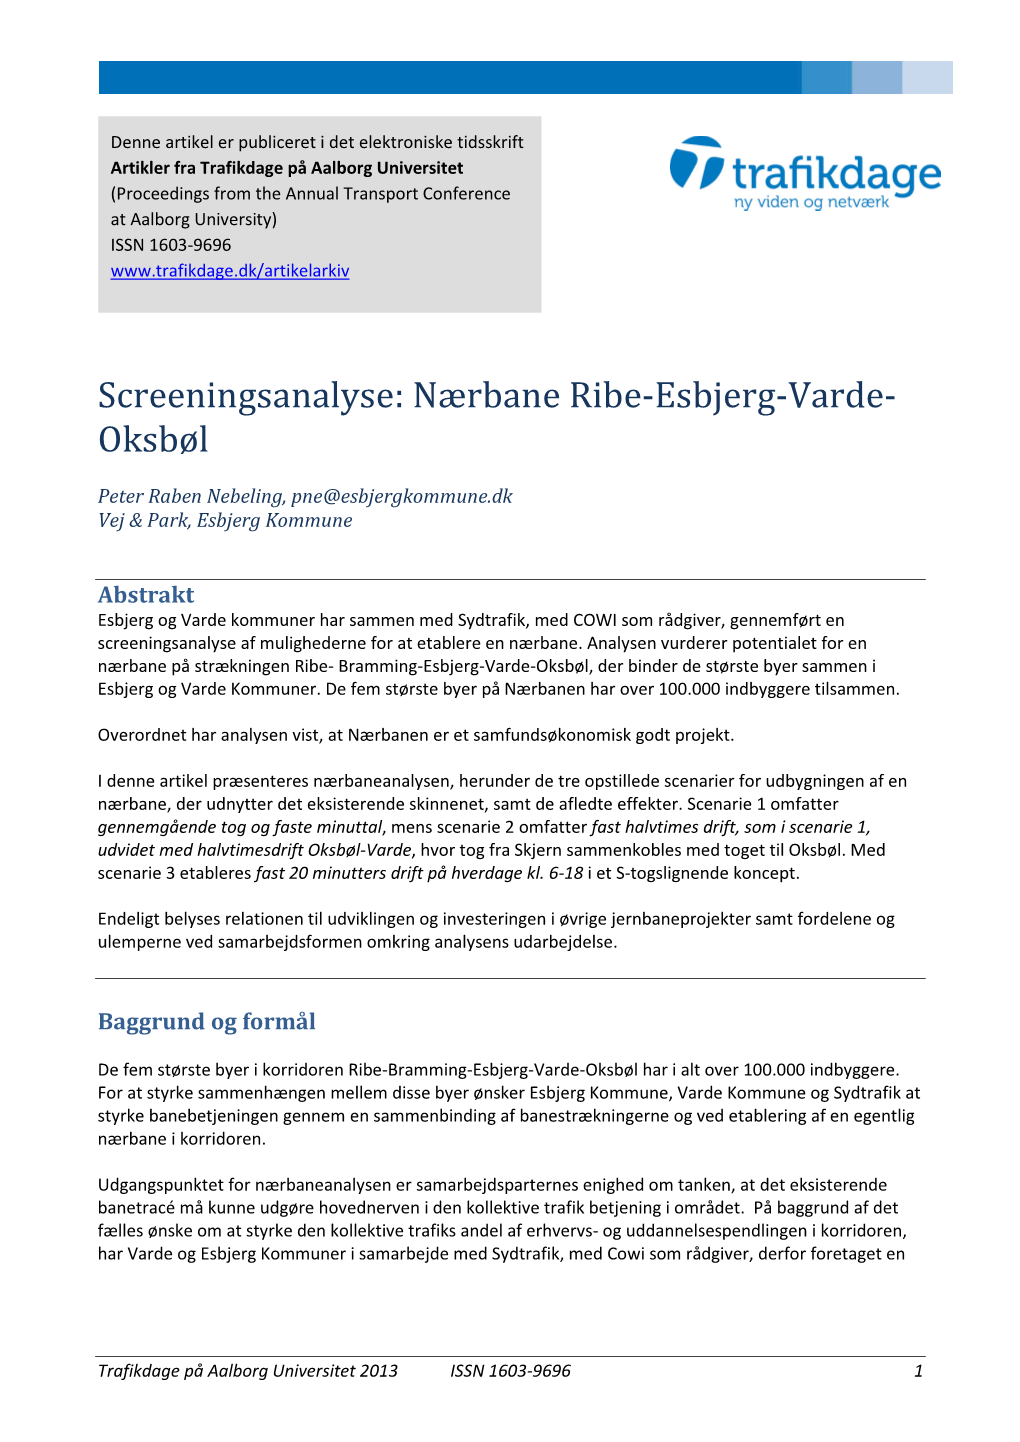 Screeningsanalyse: Nærbane Ribe-Esbjerg-Varde- Oksbøl